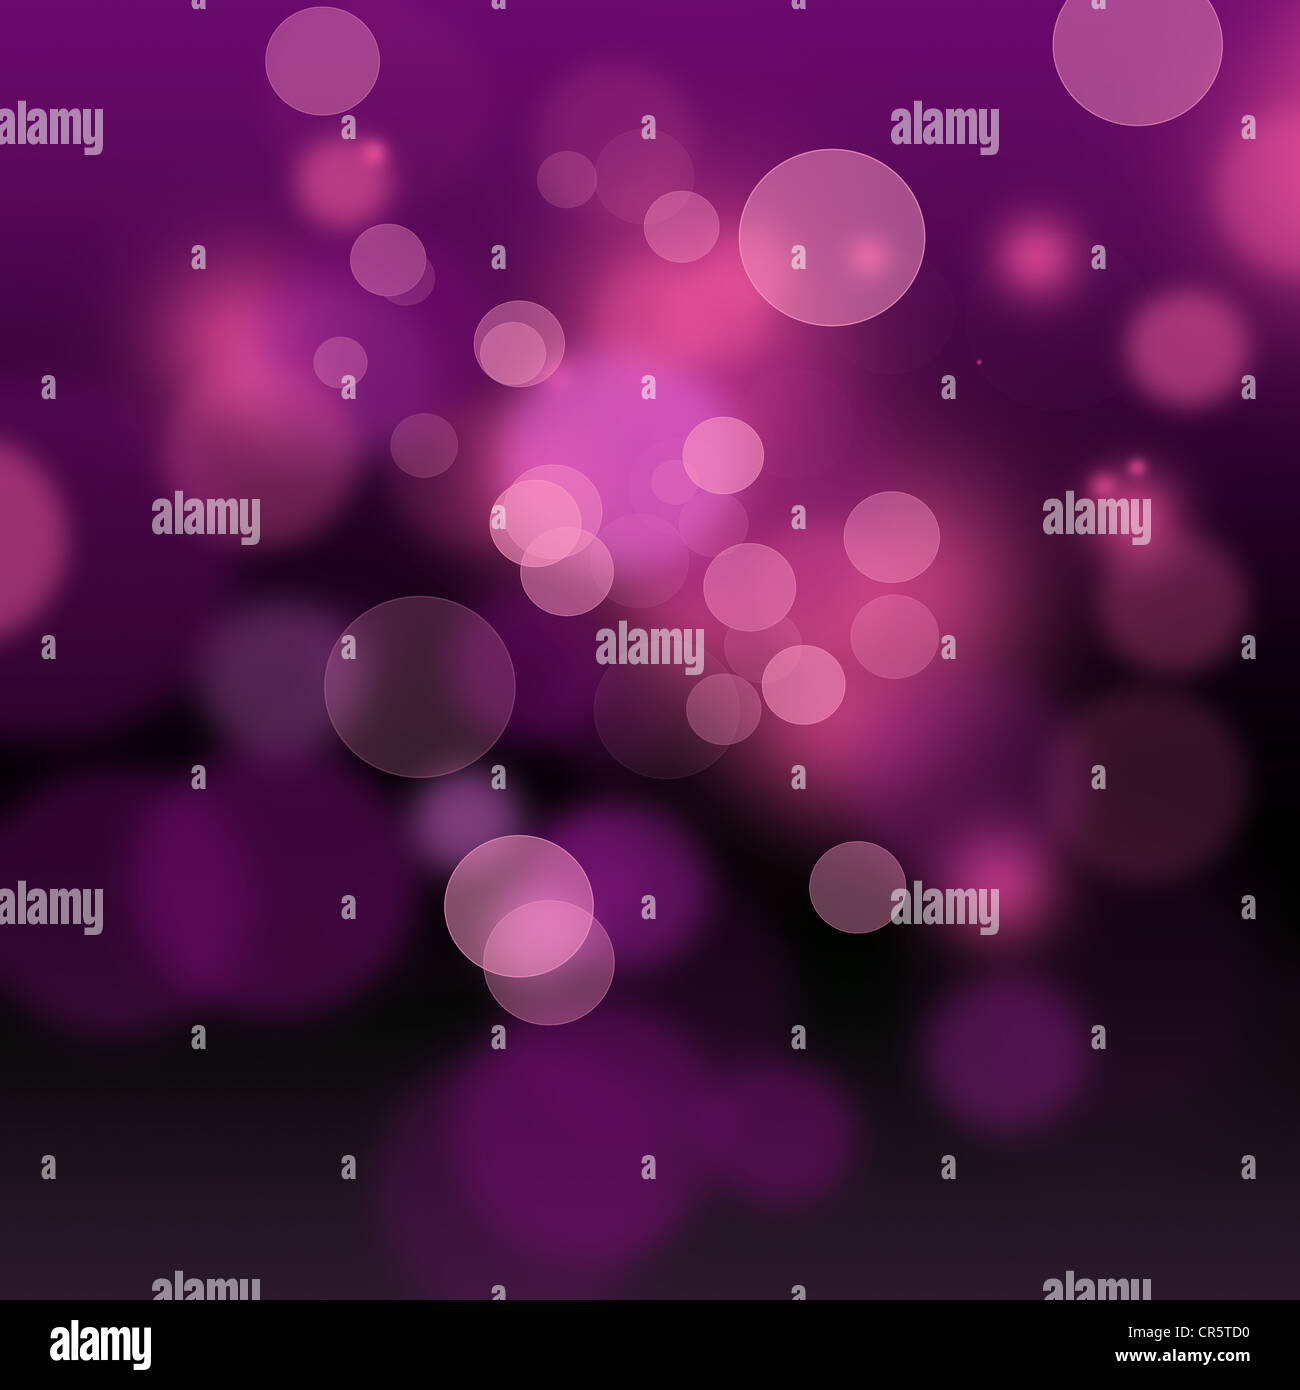 Abstract sfondo viola con luci scintillanti Foto Stock